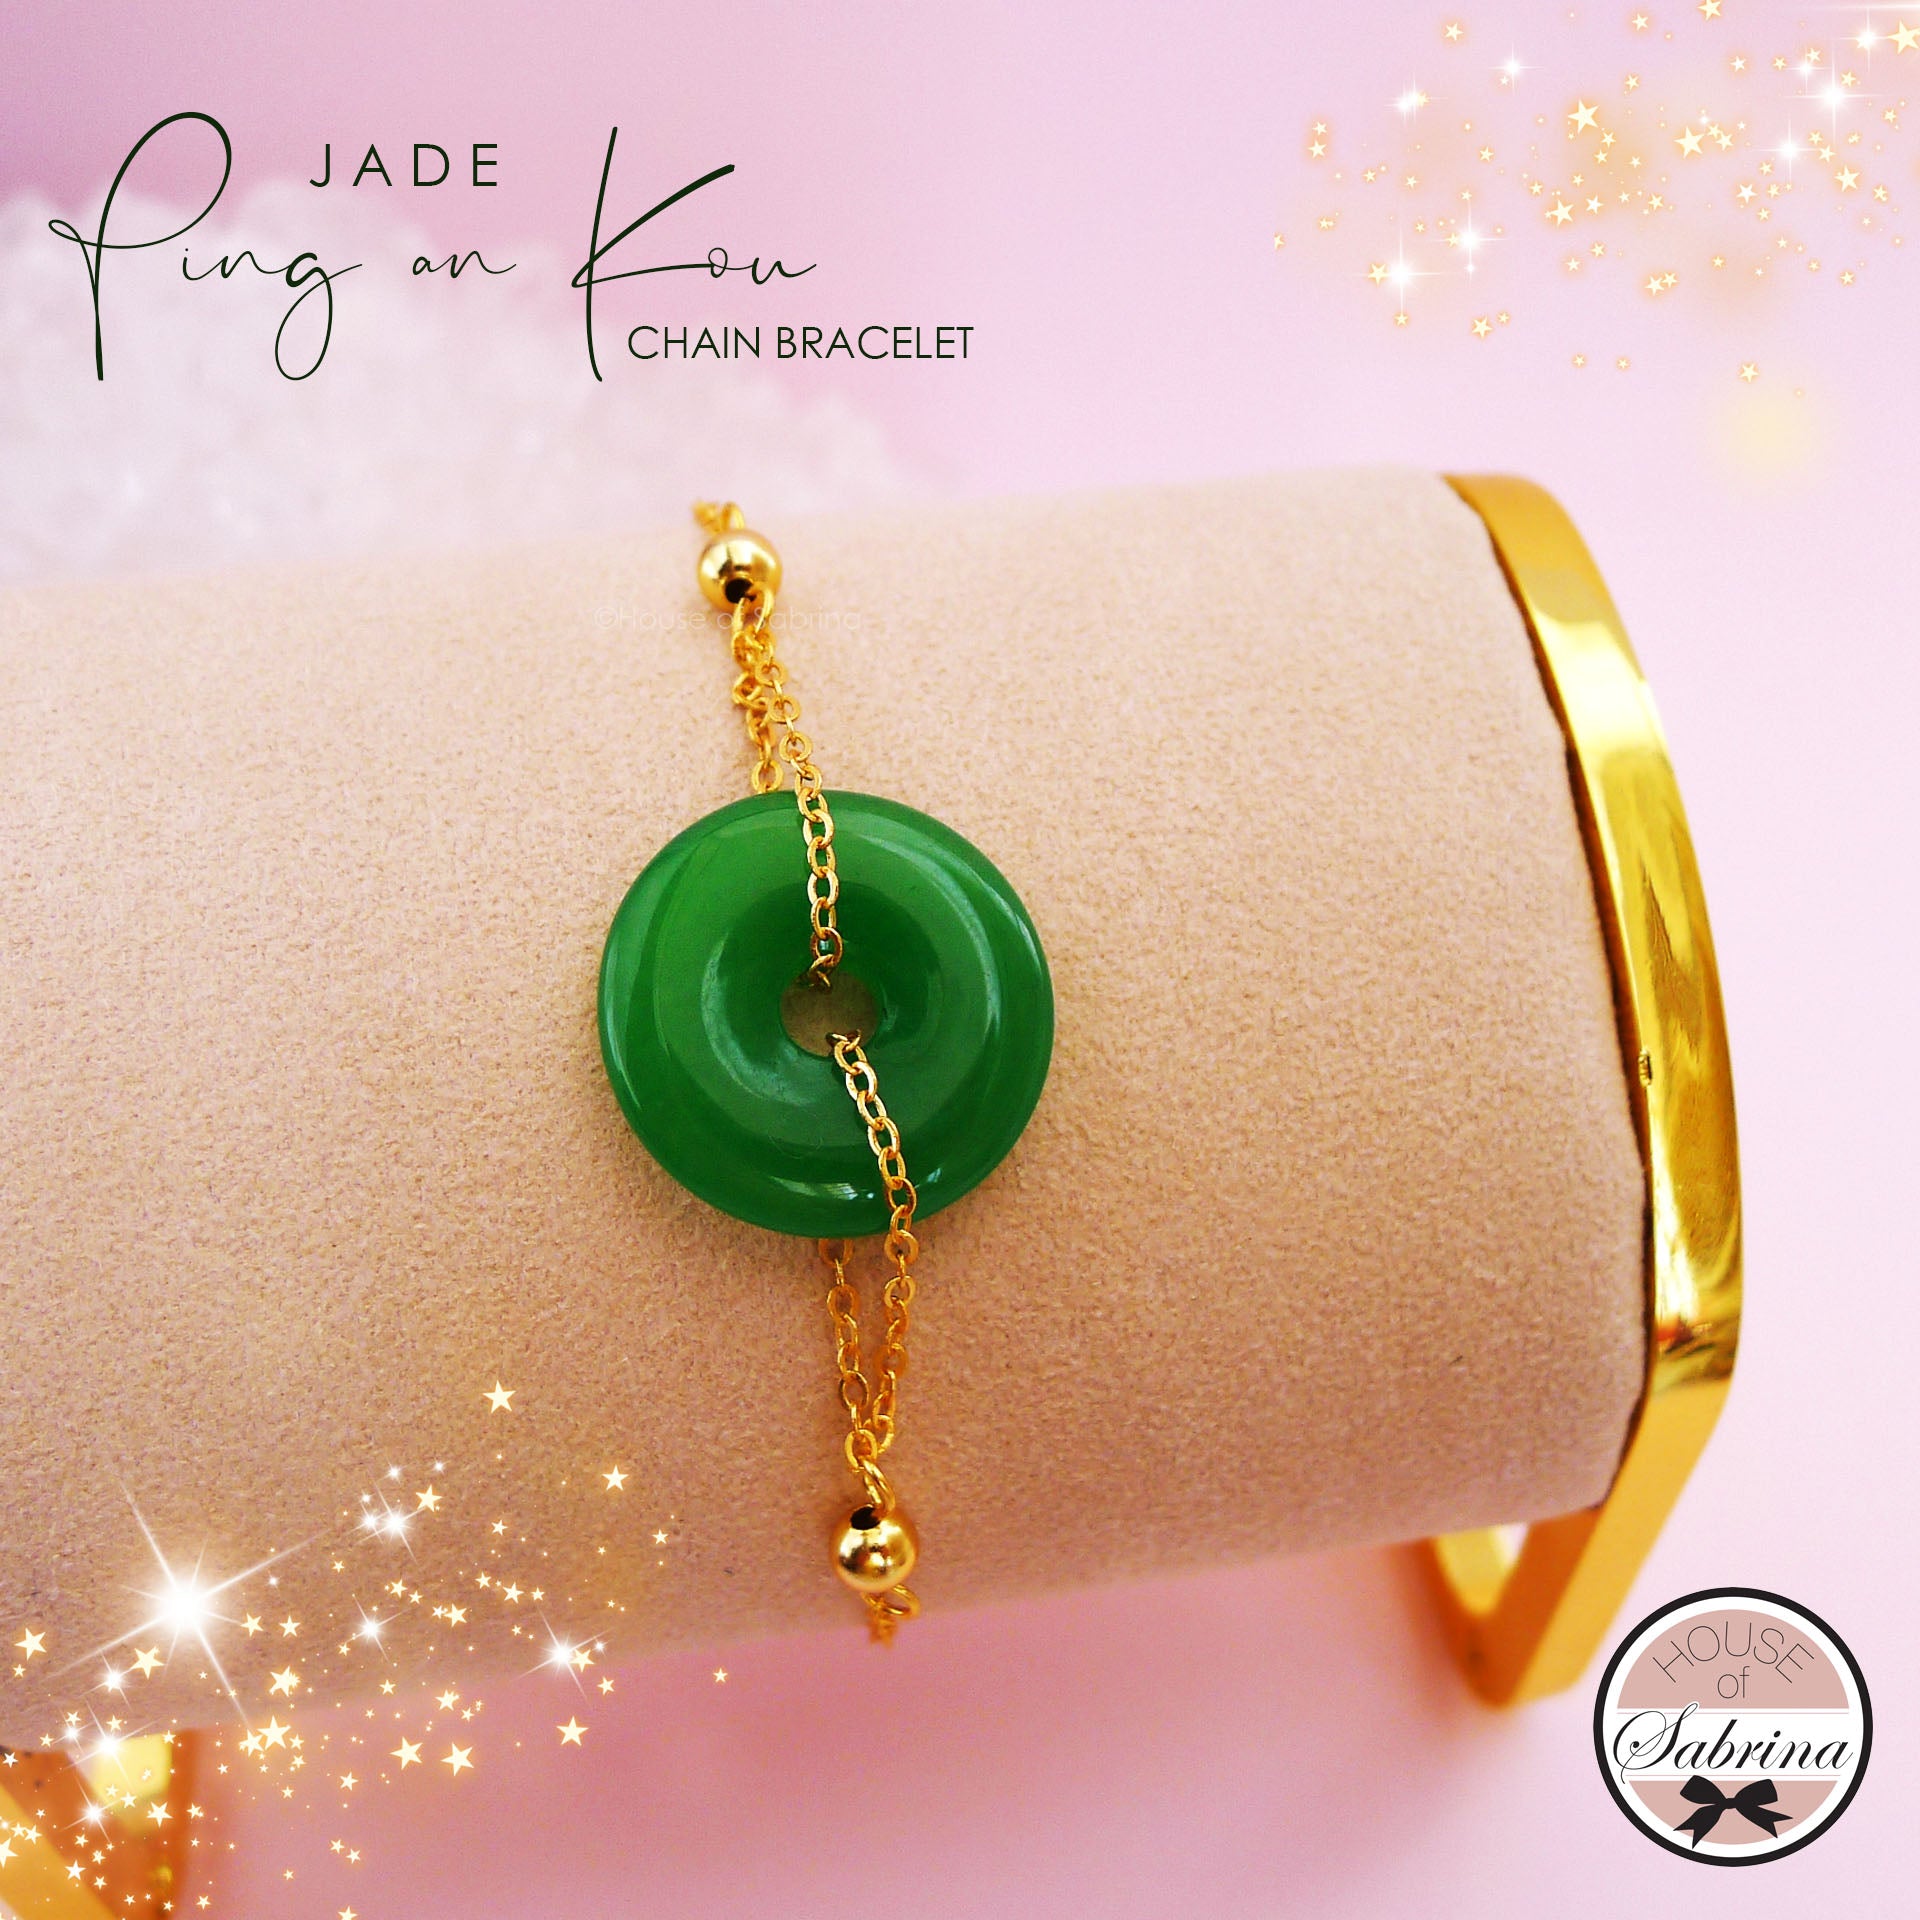 Ping An Kou Jade Chain Bracelet